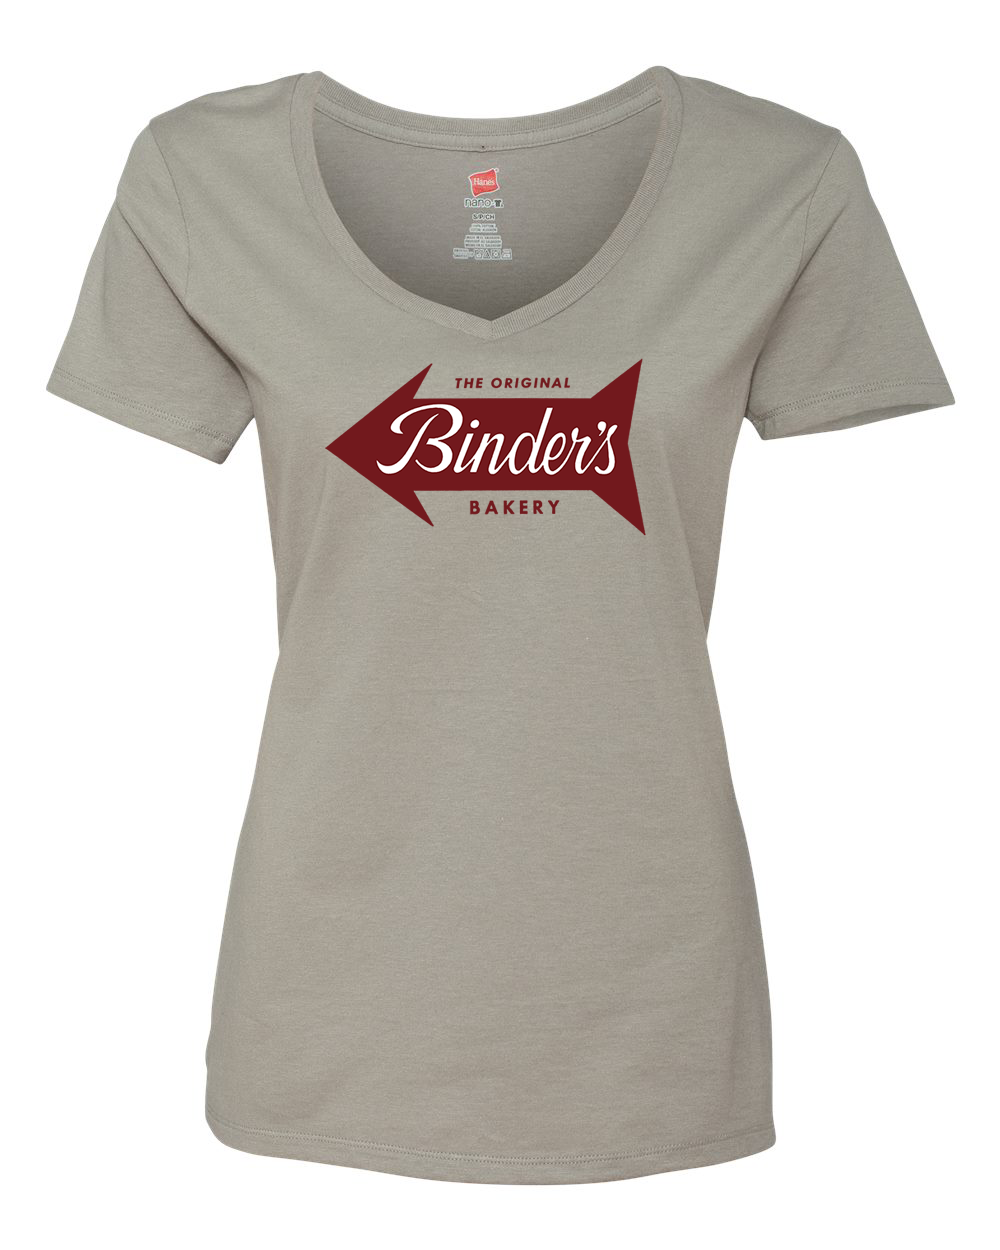 Short Sleeve Grey Ladies Cut Binder's Bakery Shirt